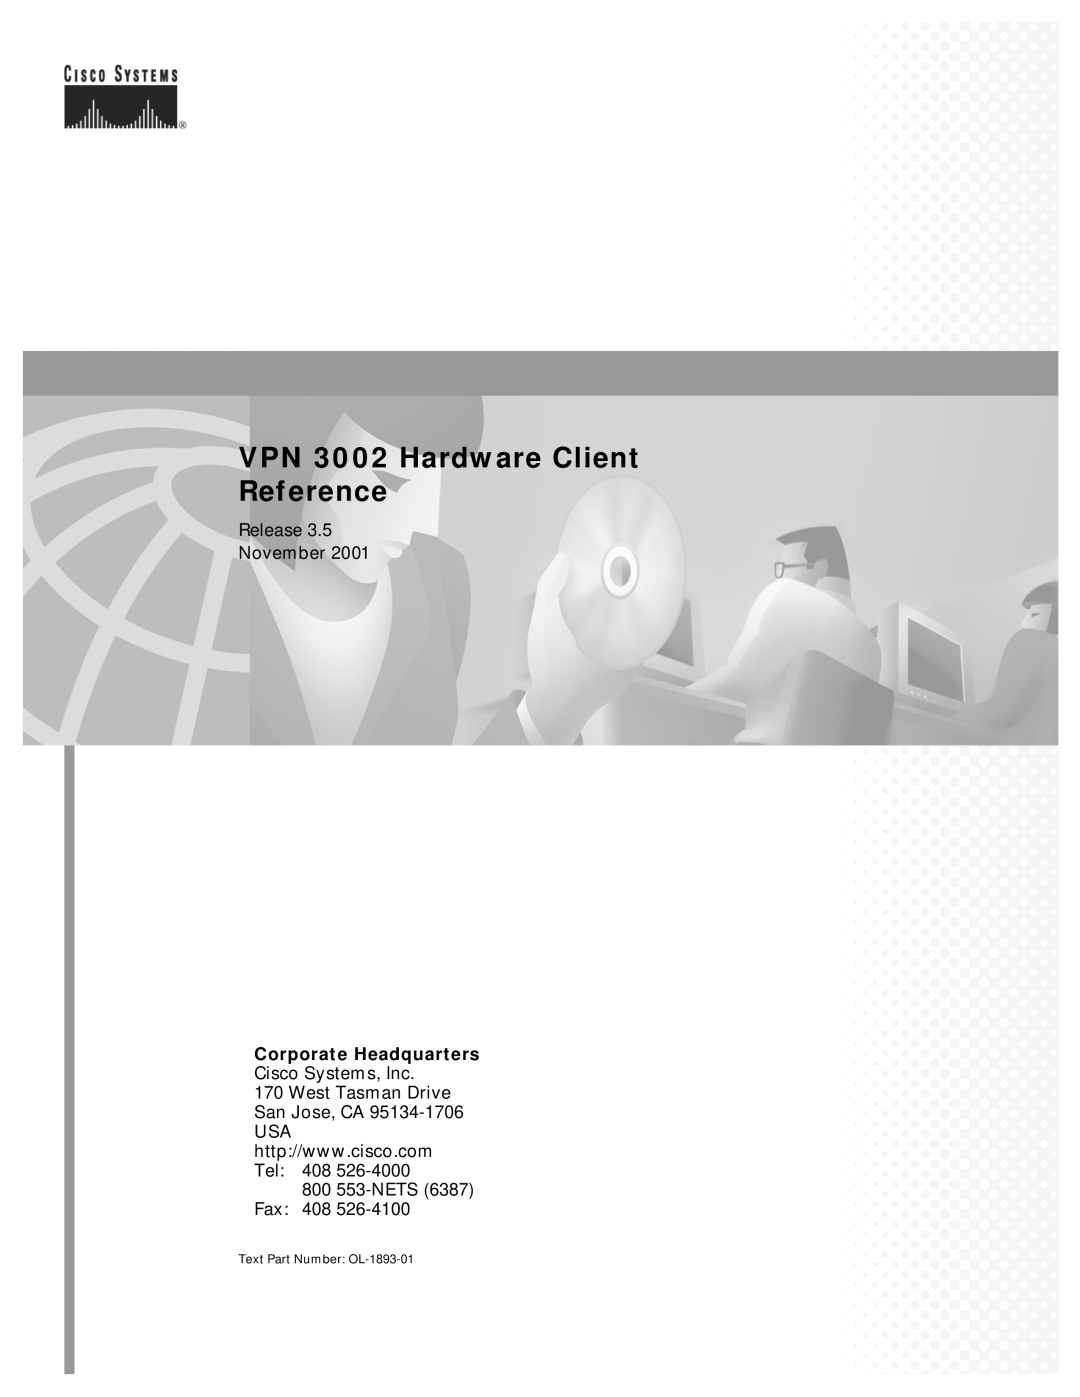 Cisco Systems VPN 3002 manual Release November, Corporate Headquarters, Cisco Systems, Inc, West Tasman Drive San Jose, CA 